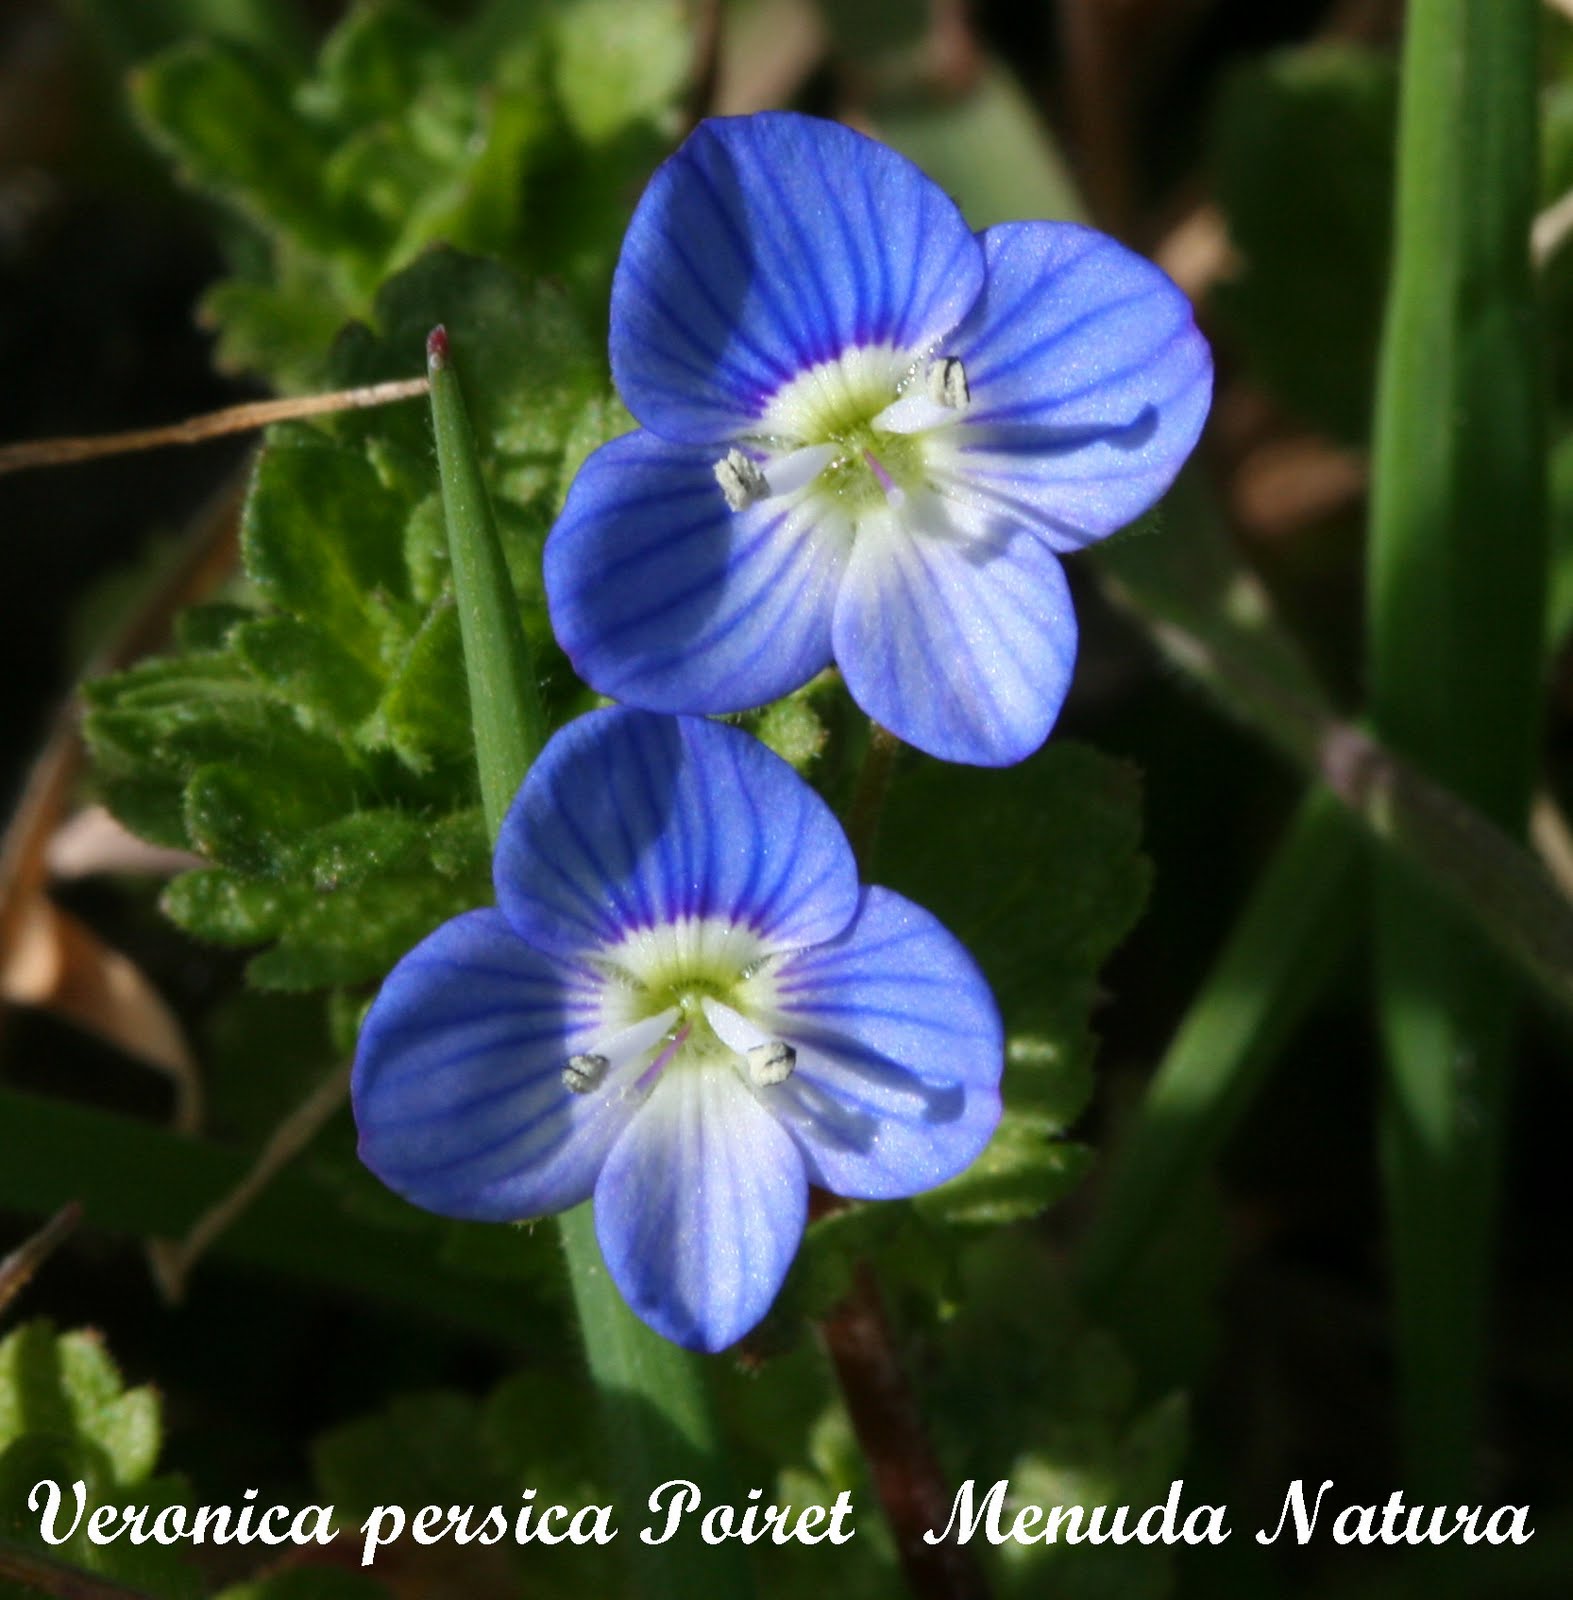 Menuda Natura: Veronica persica Poiret